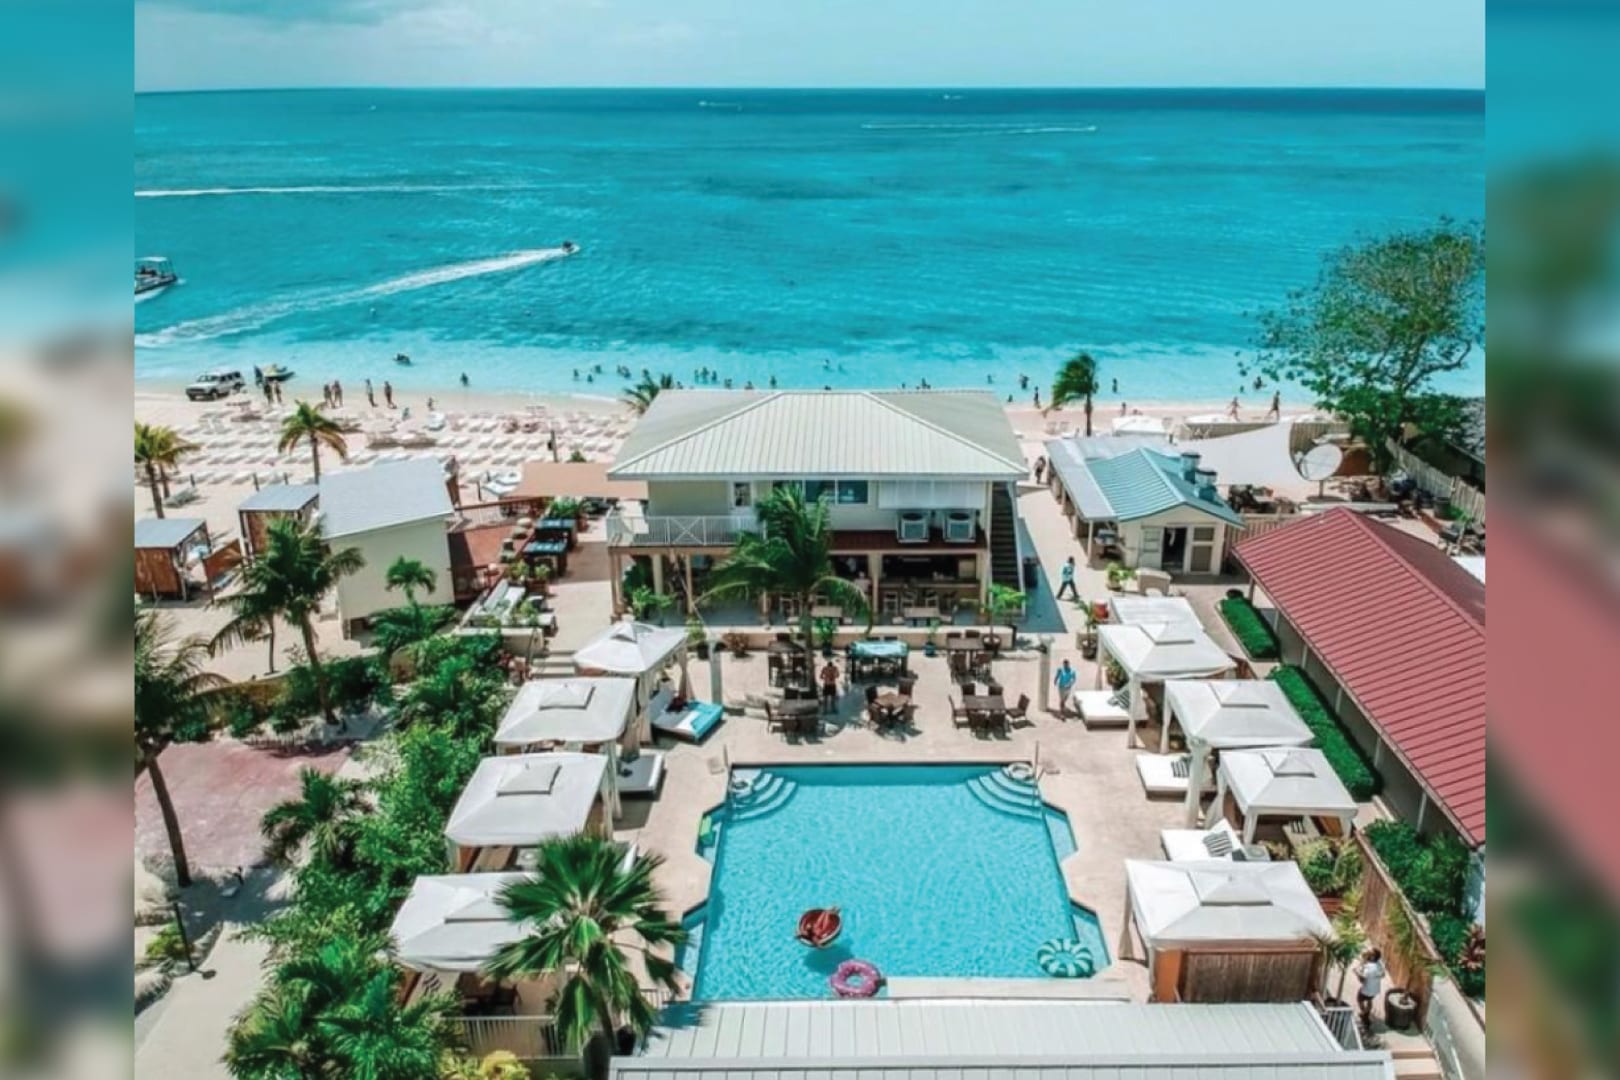 Royal Palms Beach Club (permanently closed) | Cityplugged Cayman